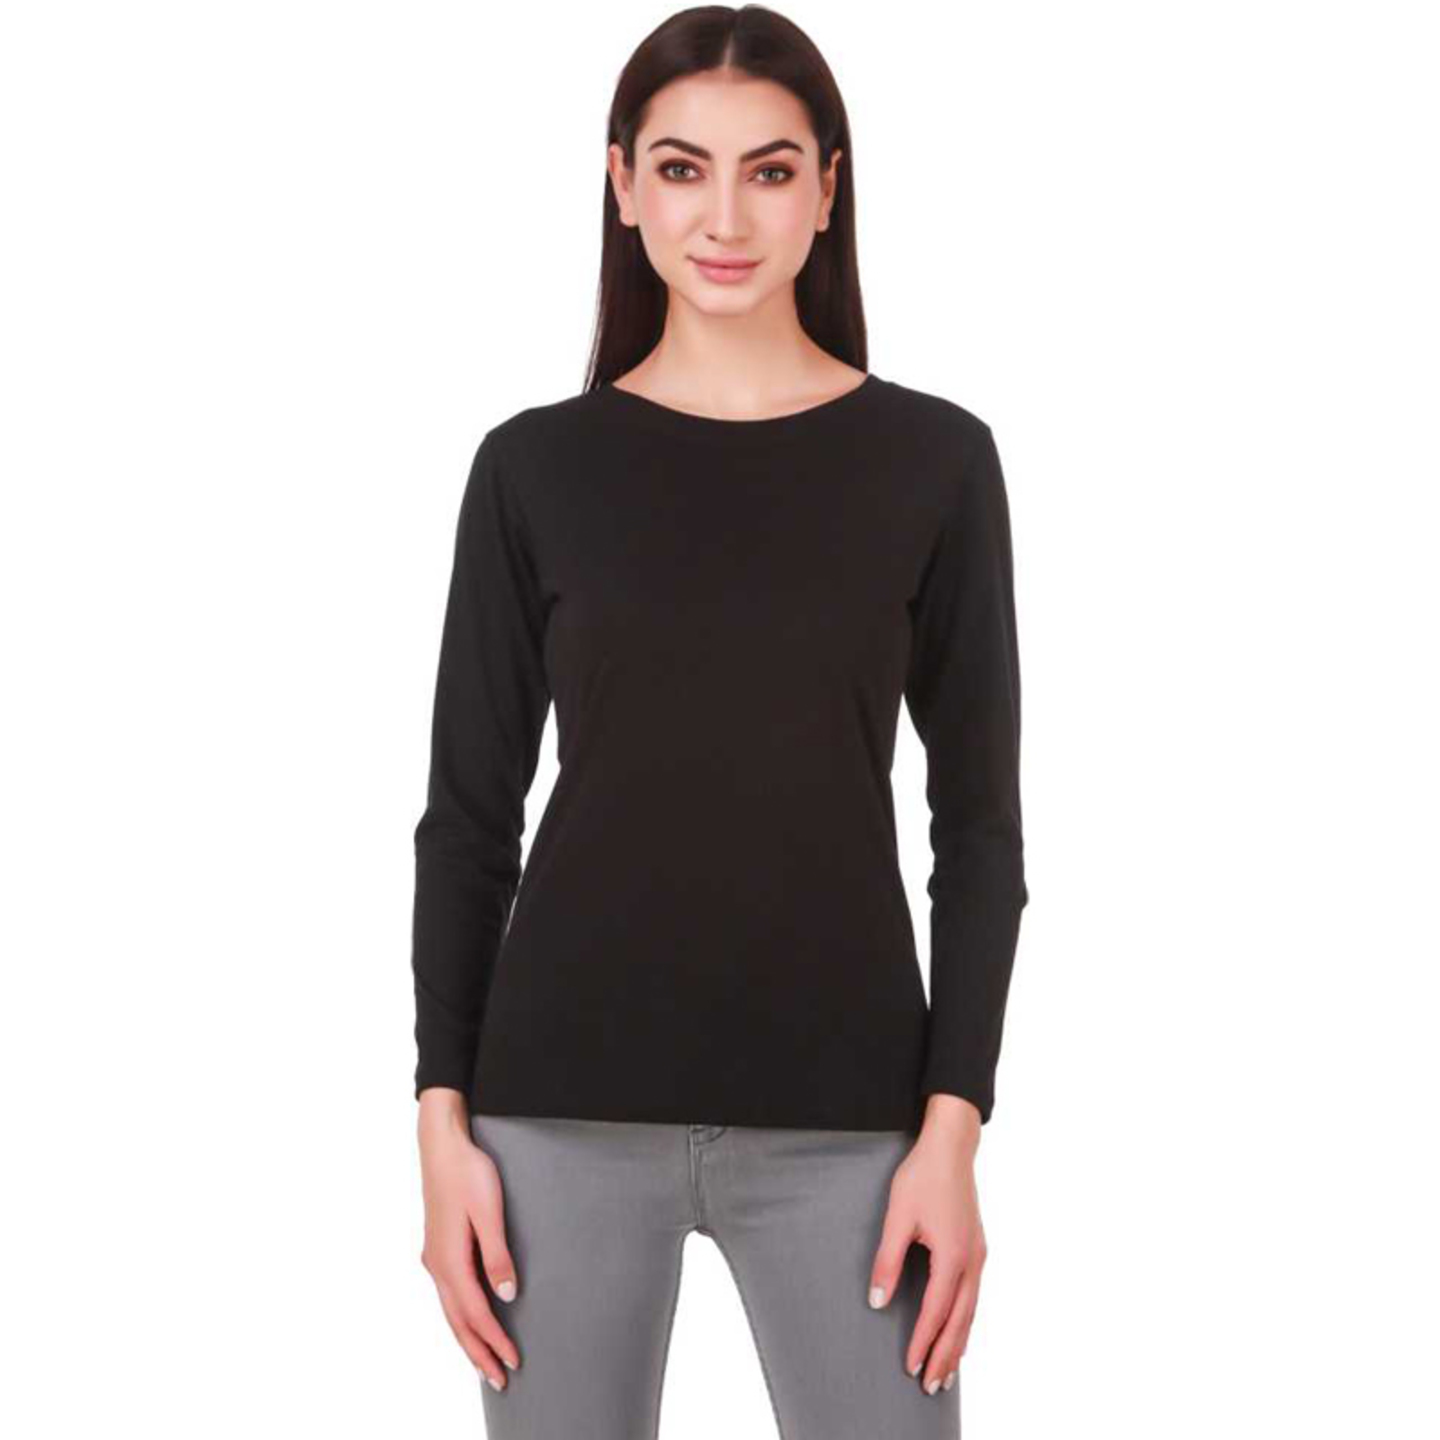 Paretto Black Full Sleeves Cotton T-shirt for Women